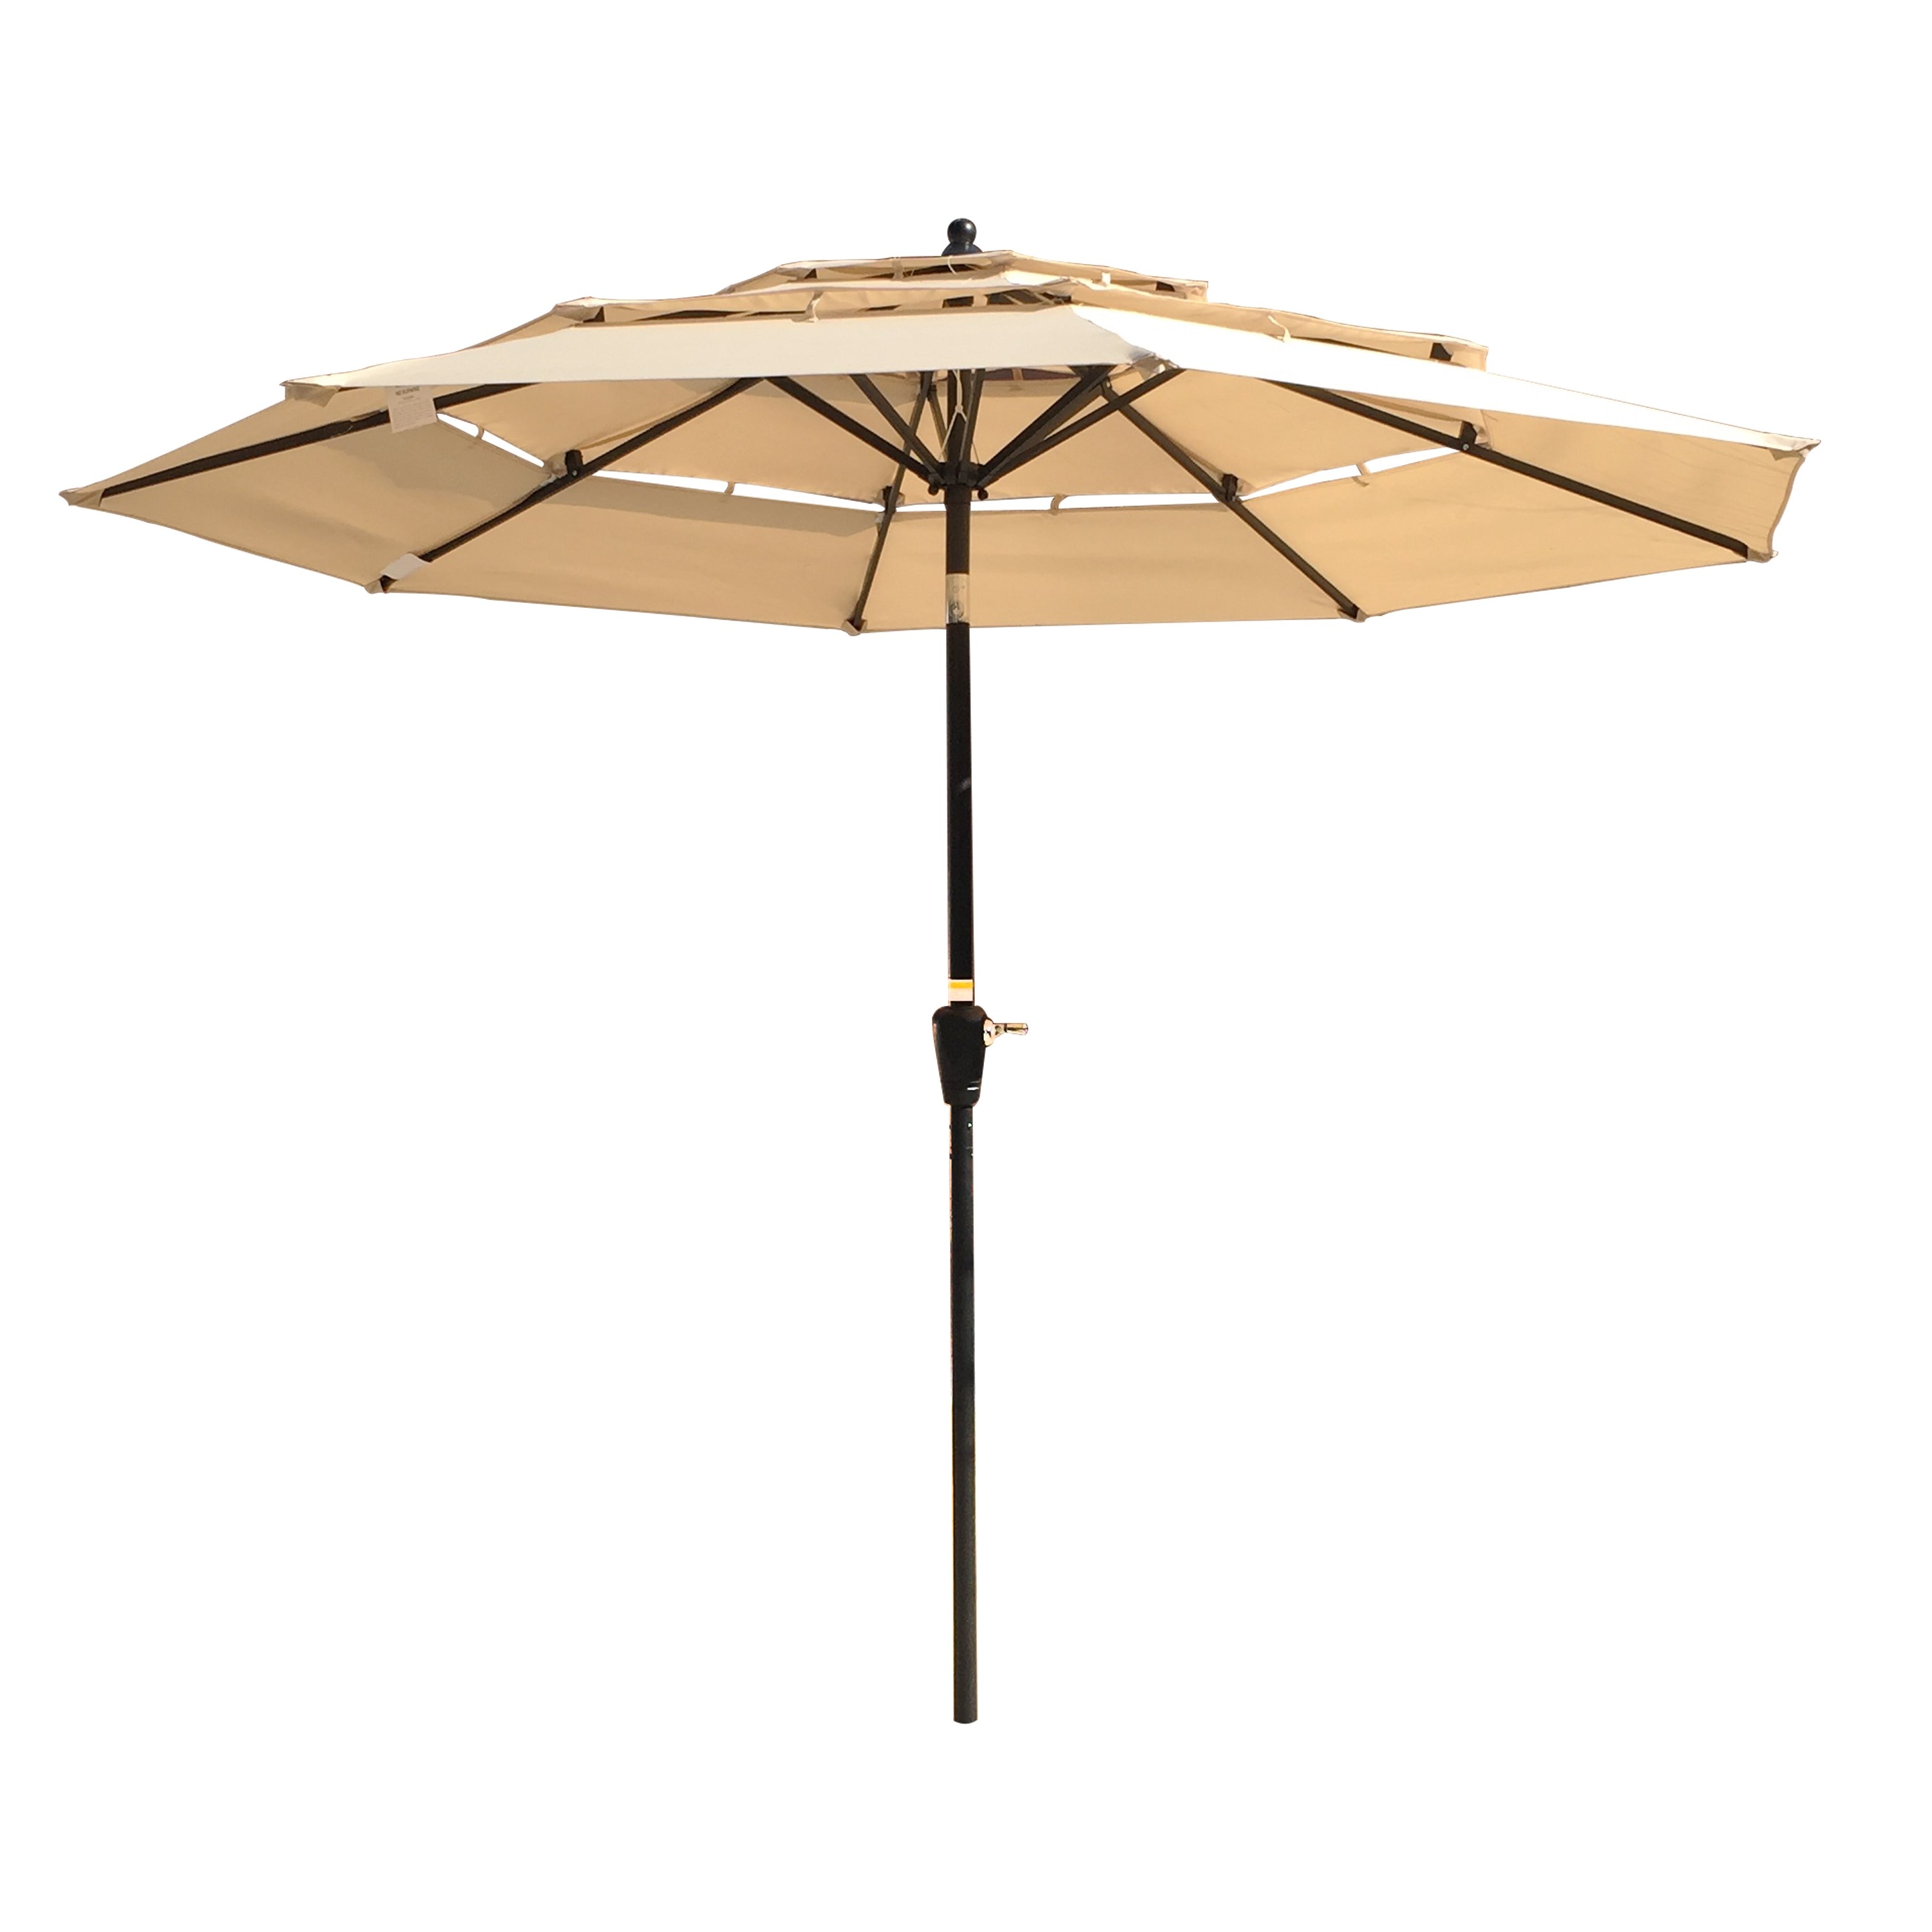 UHINOOS 7.5ft Patio Umbrella Outdoor Table Market Umbrella with Push Button Tilt/Crank,6 Ribs Wine 